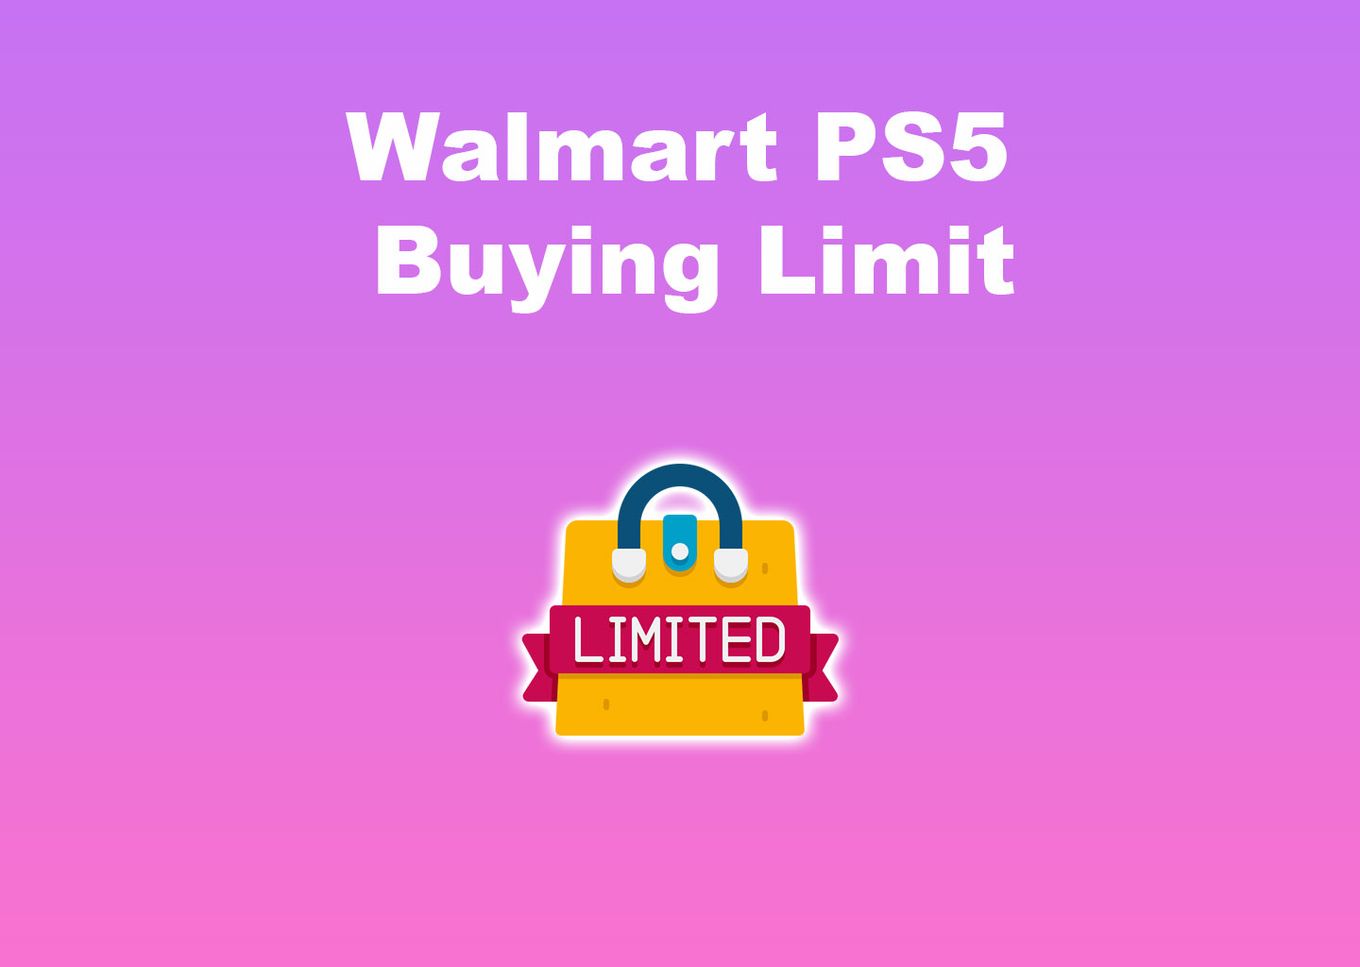 Walmart PS5 Buying Limit